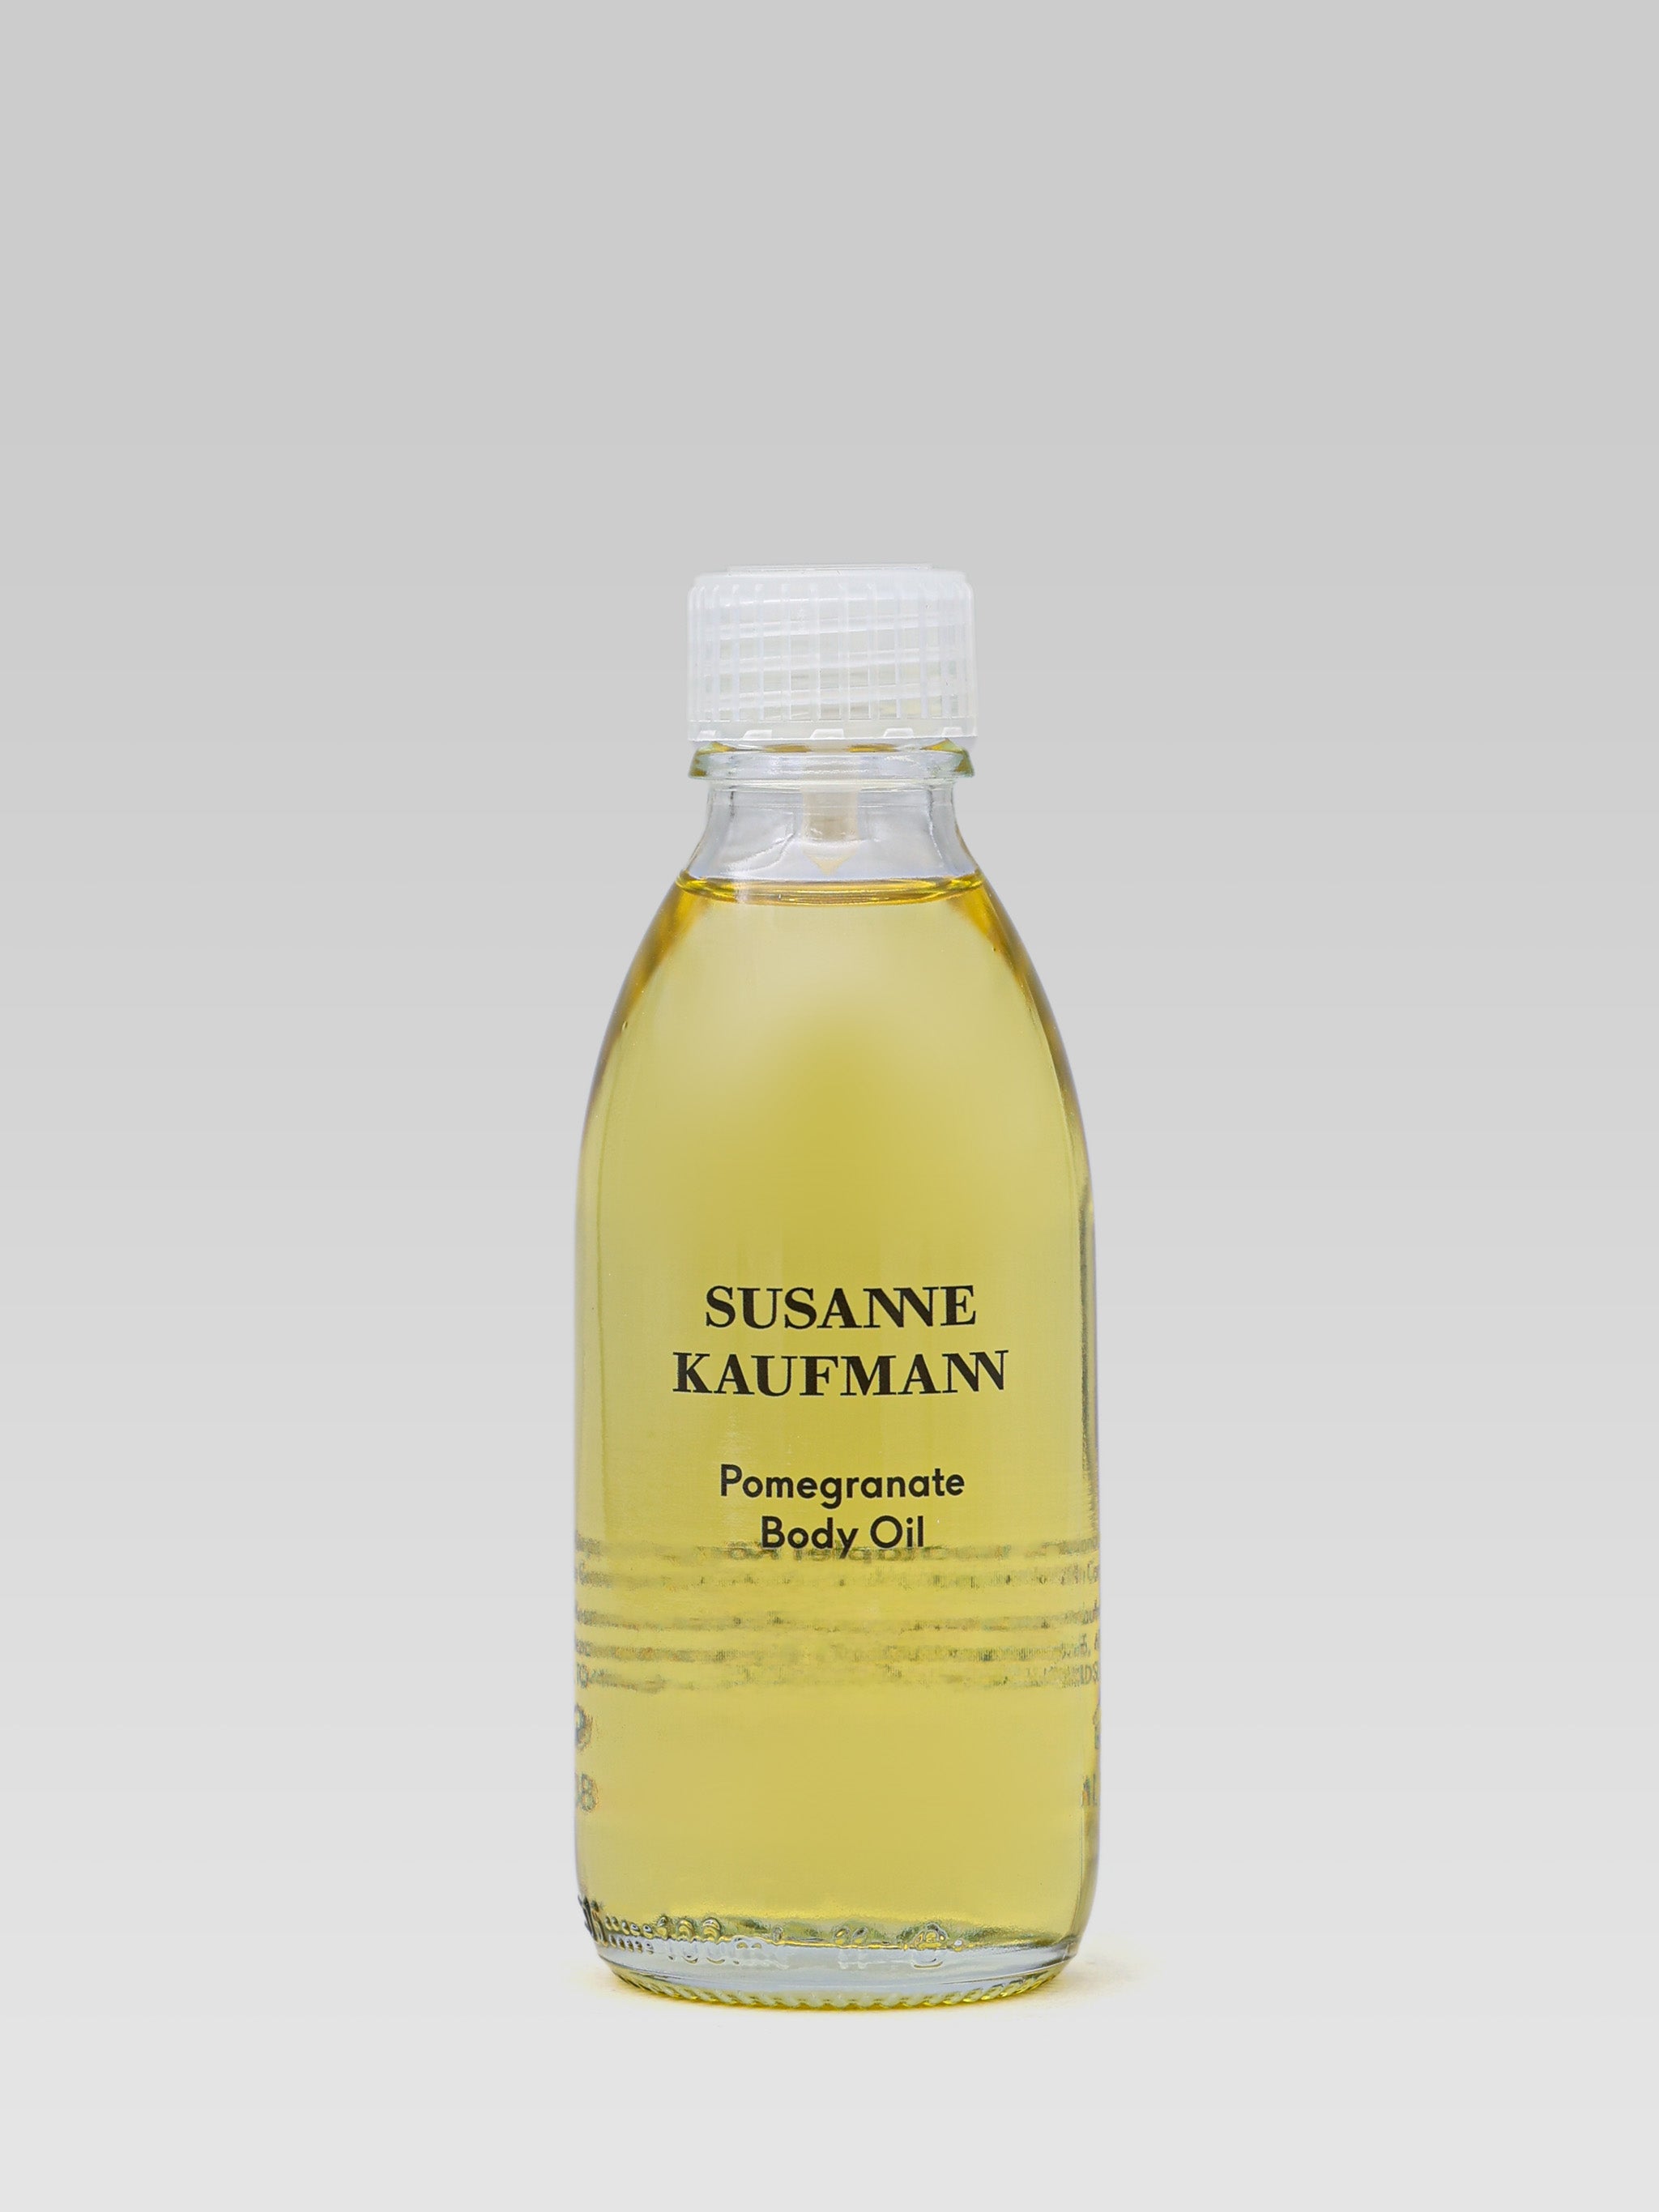 Susanne Kaufmann Pomegranate Body Oil 100 ml product shot 